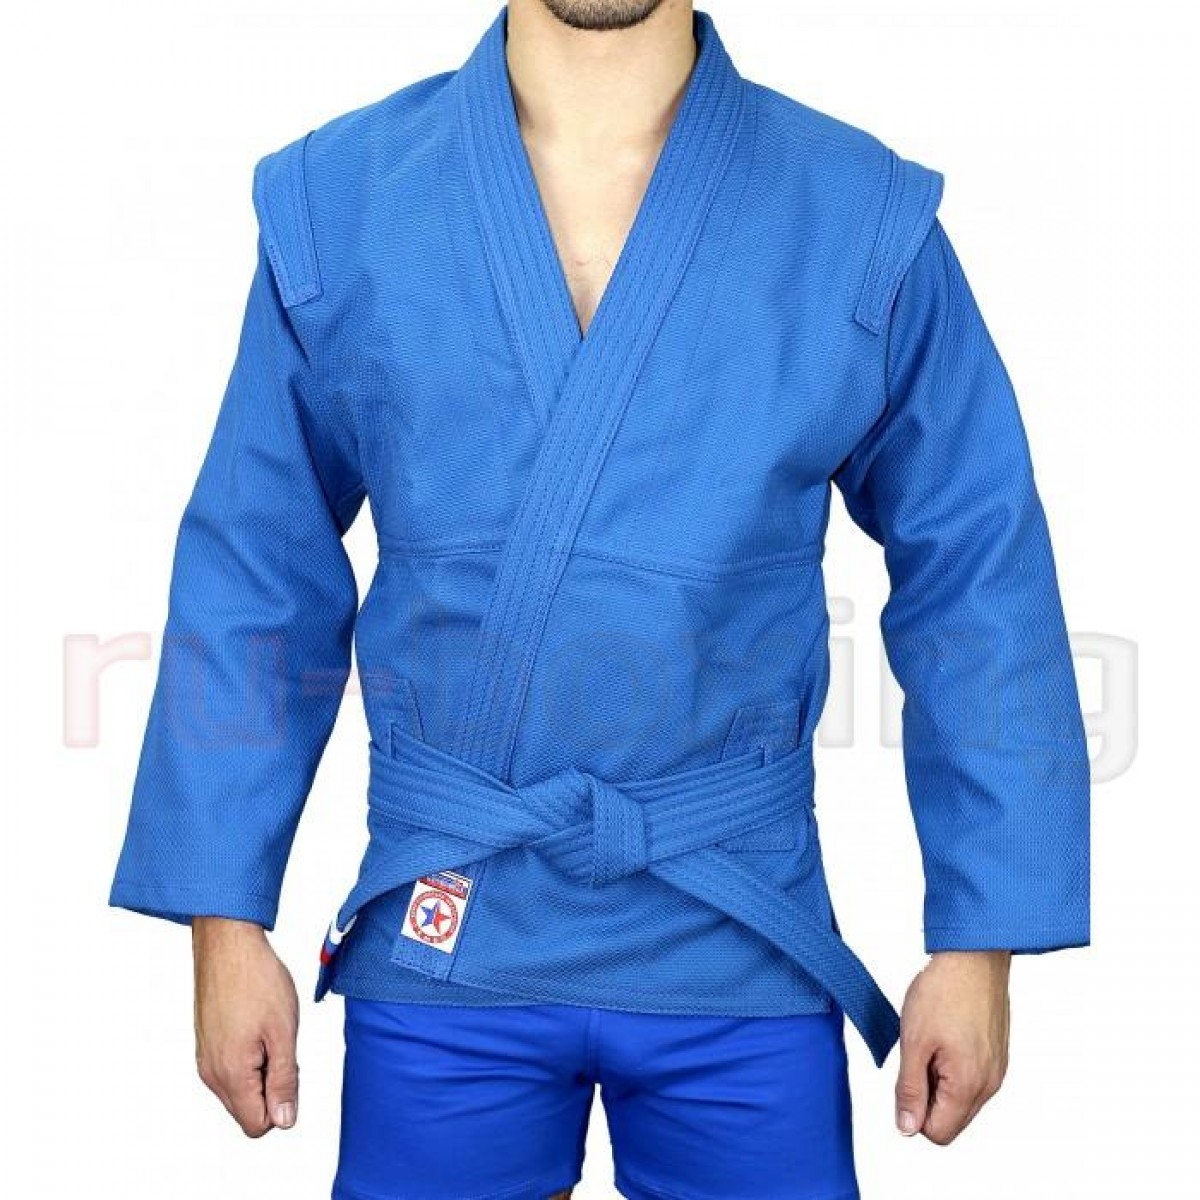 Куртка для самбо Атака размер 36 синяя